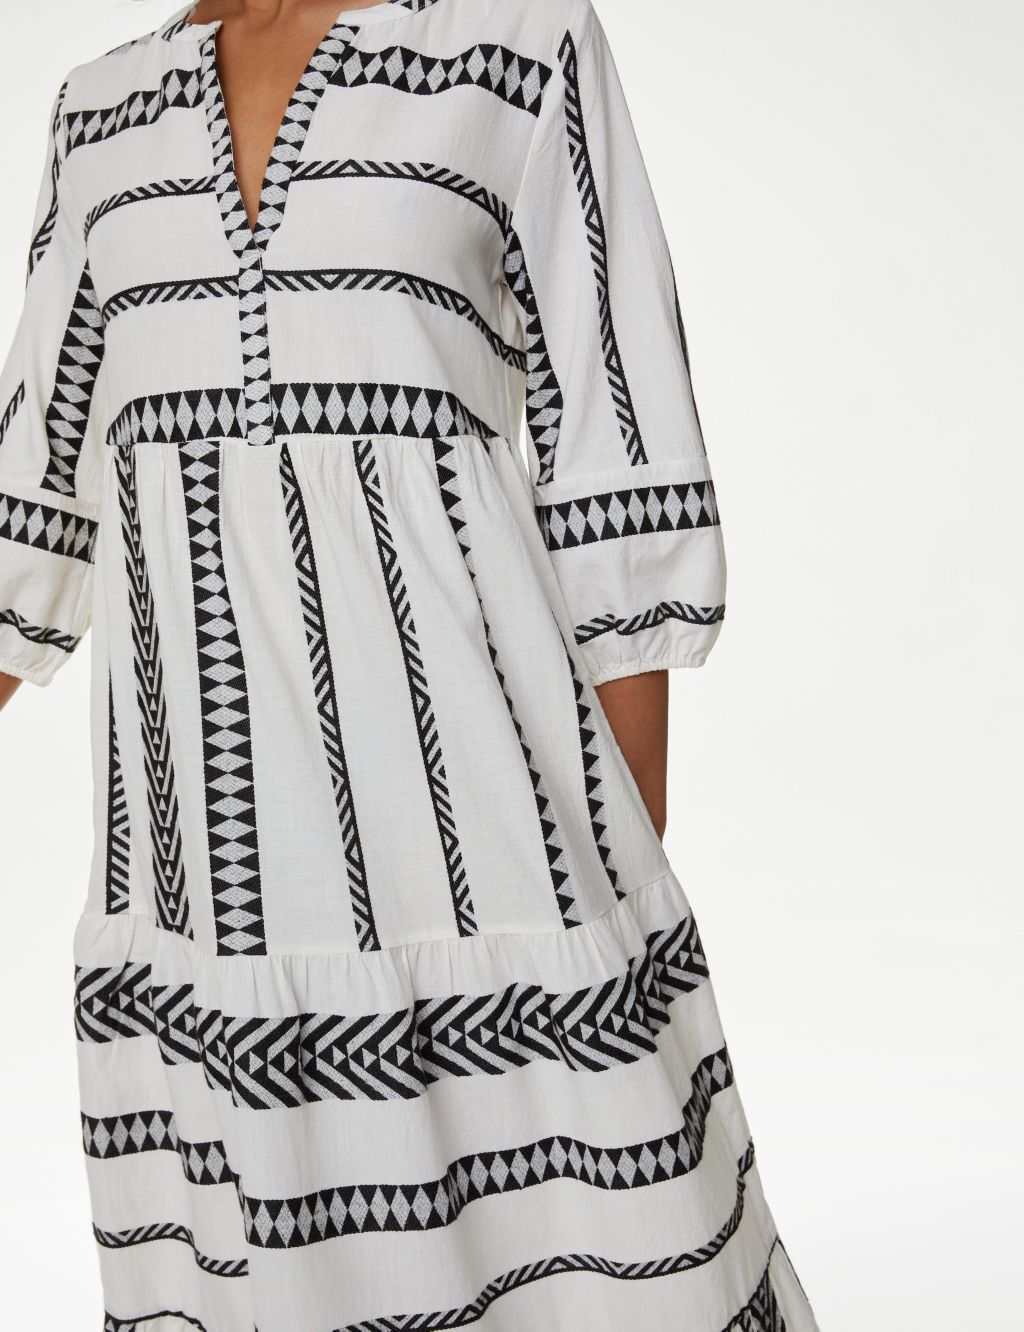 Cotton Rich Jacquard Midaxi Beach Dress image 2